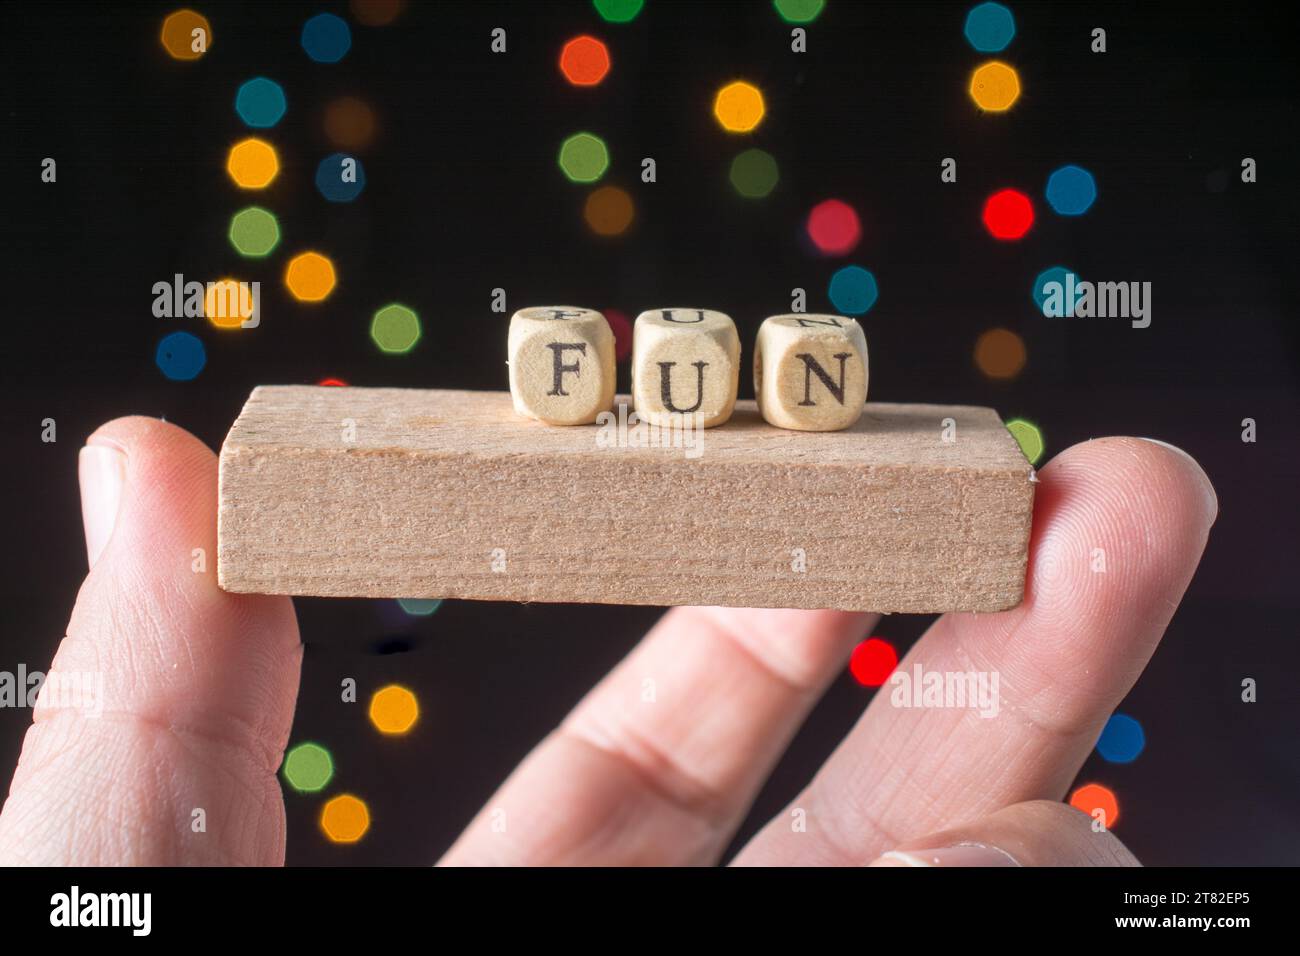 Fun wording in hand cubes bokeh lighton a dark background Stock Photo